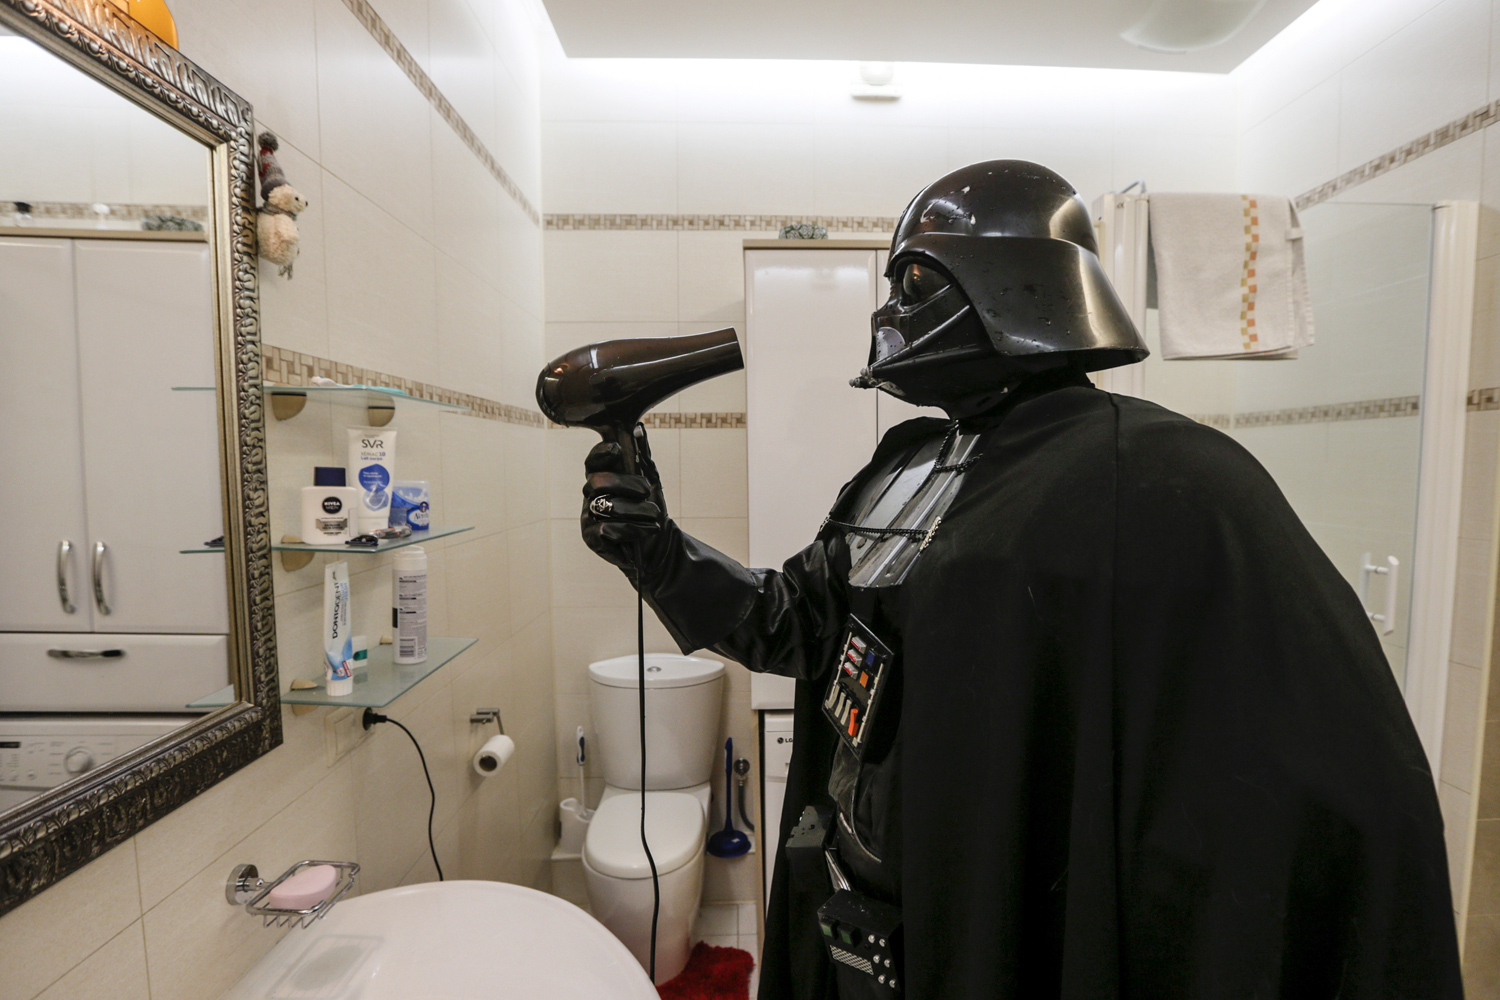 Darth Vader I Am a Jedi Dish Towels